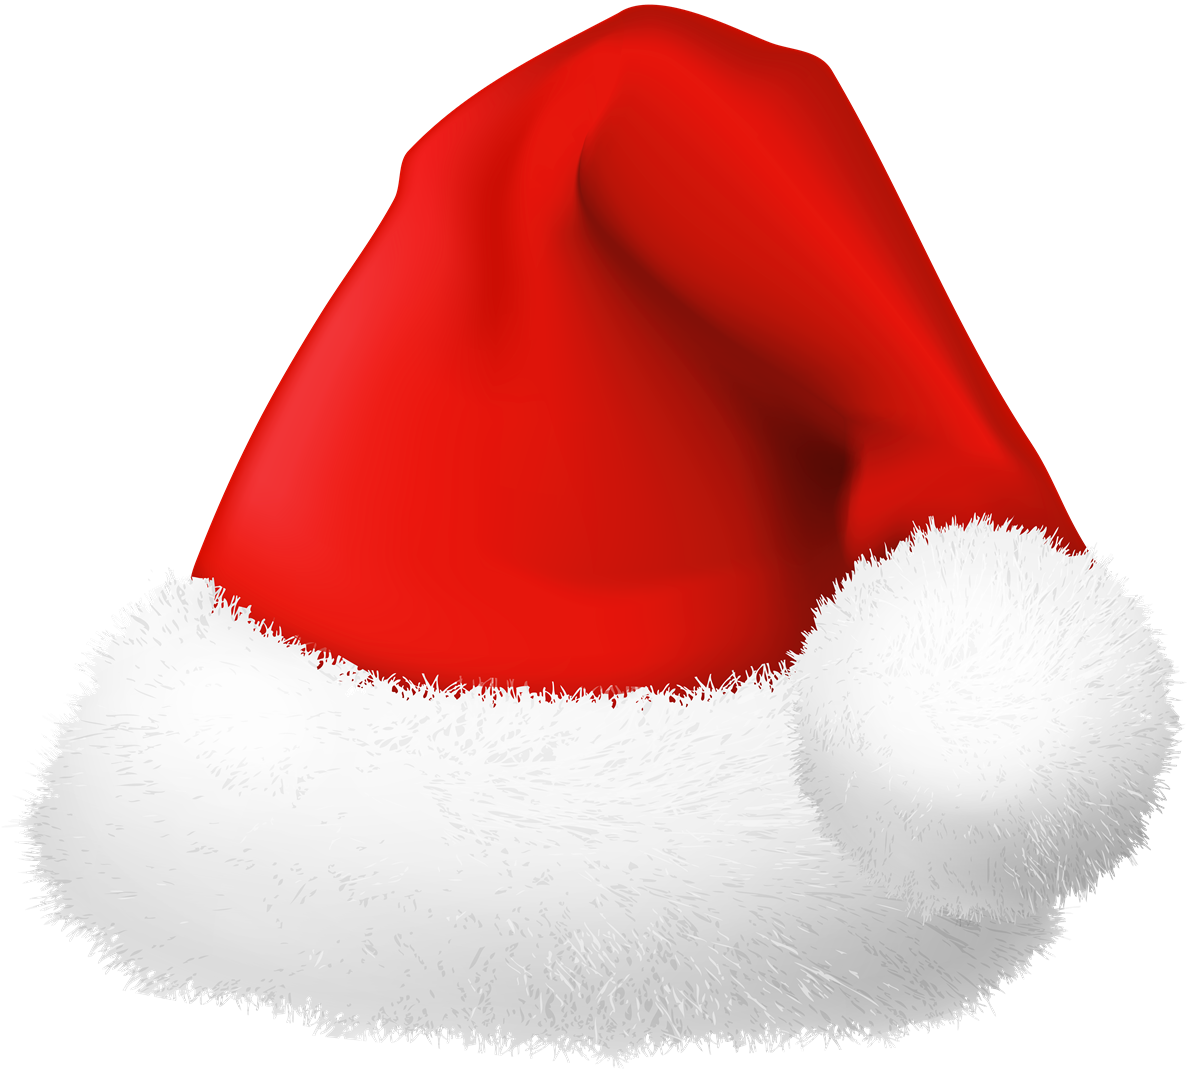 Santa Claus Hat PNG Transparent Image